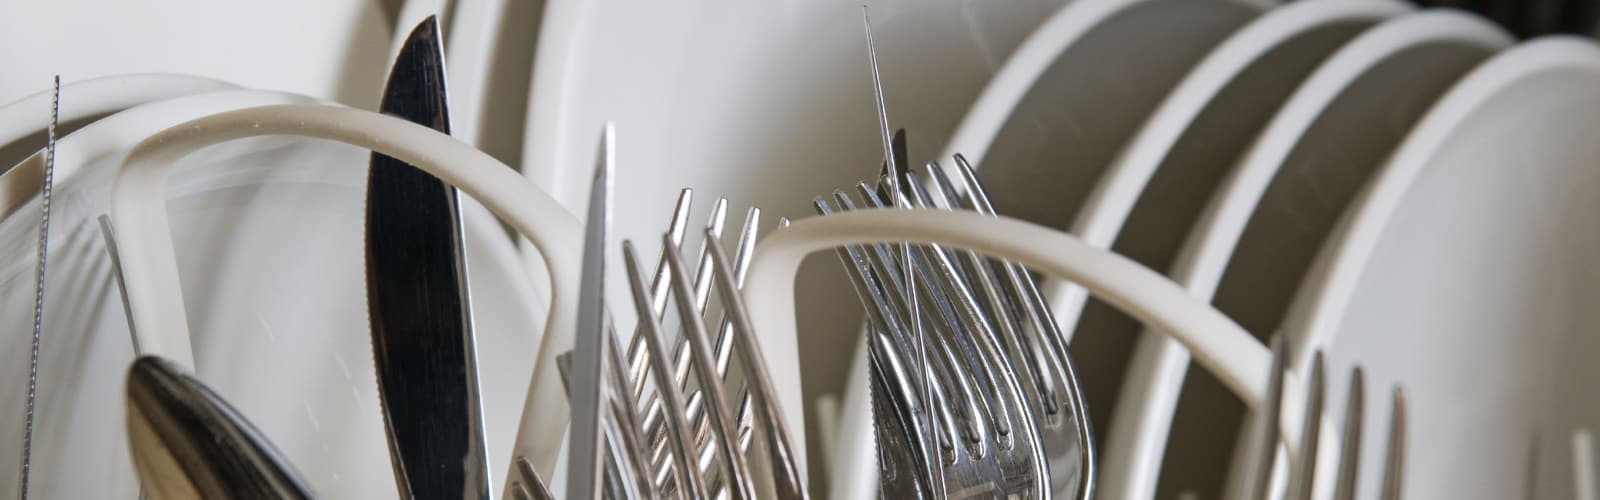 Clean cutlery in dishwasher rack.